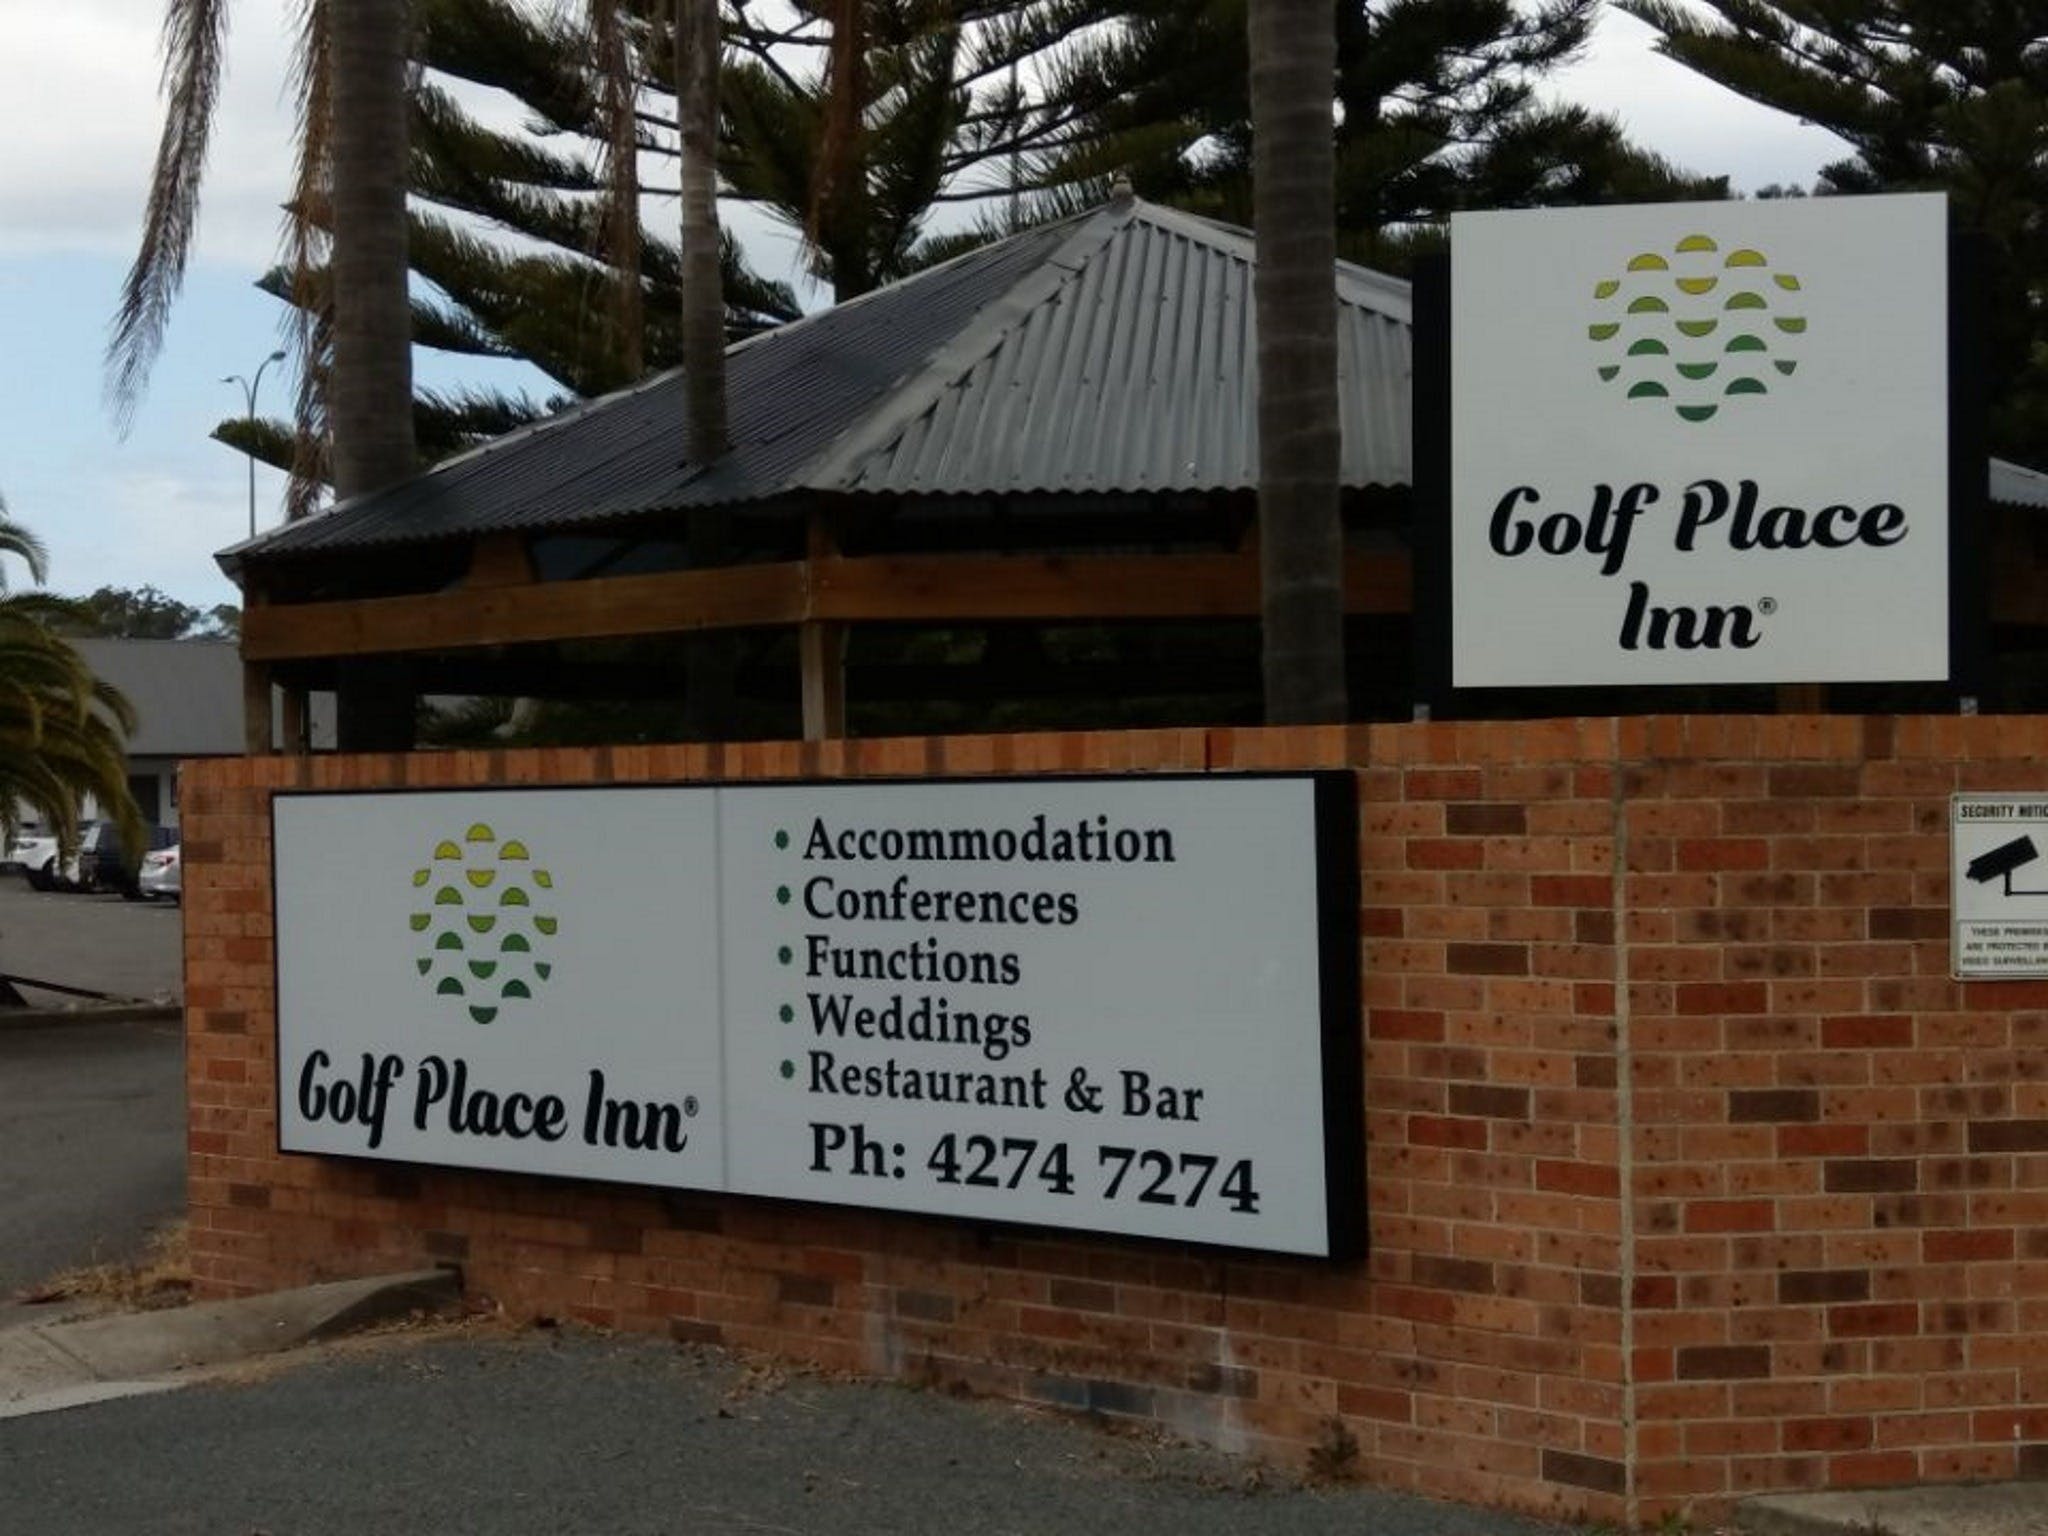 Golf Place Inn - Accommodation Resorts